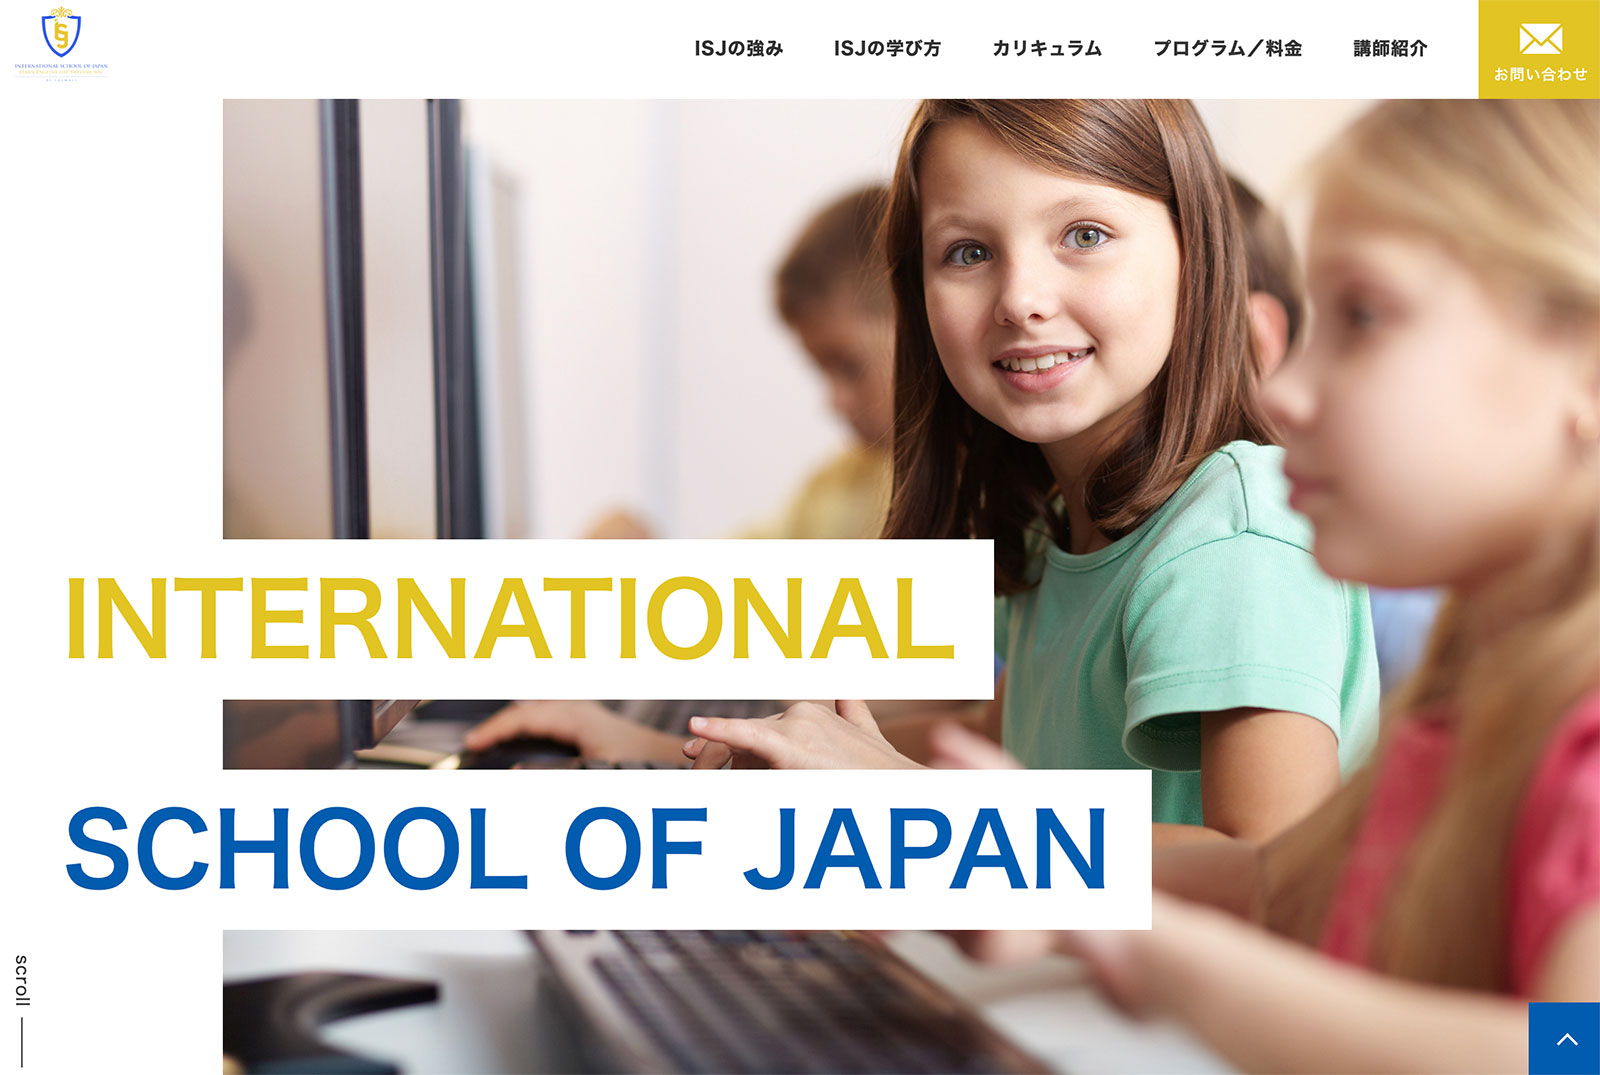 INTERNATIONAL SCHOOL OF JAPAN